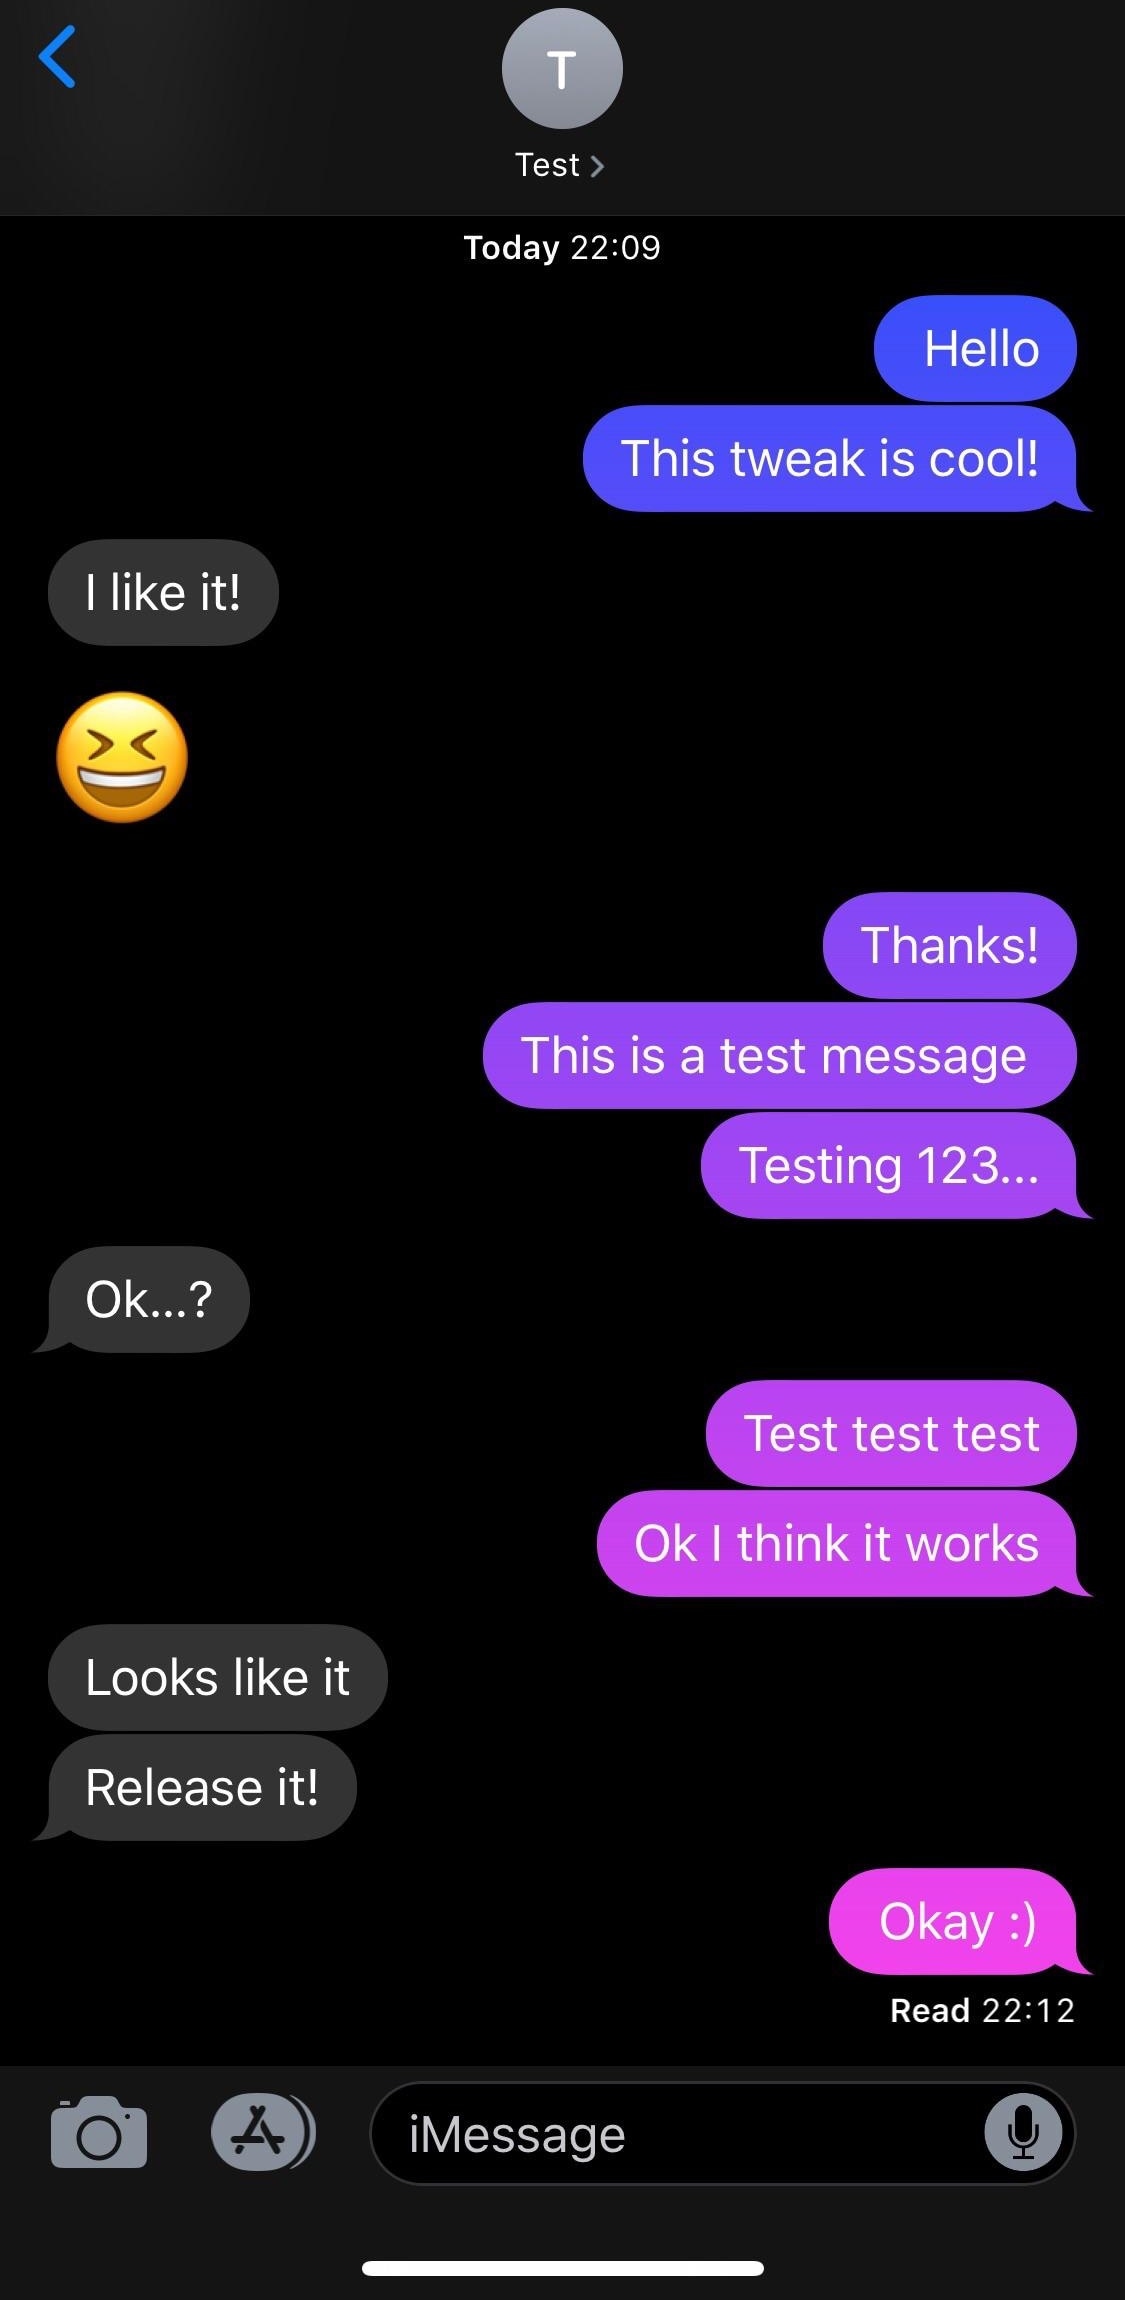 MessageColors lets you add color gradients to the Messages app